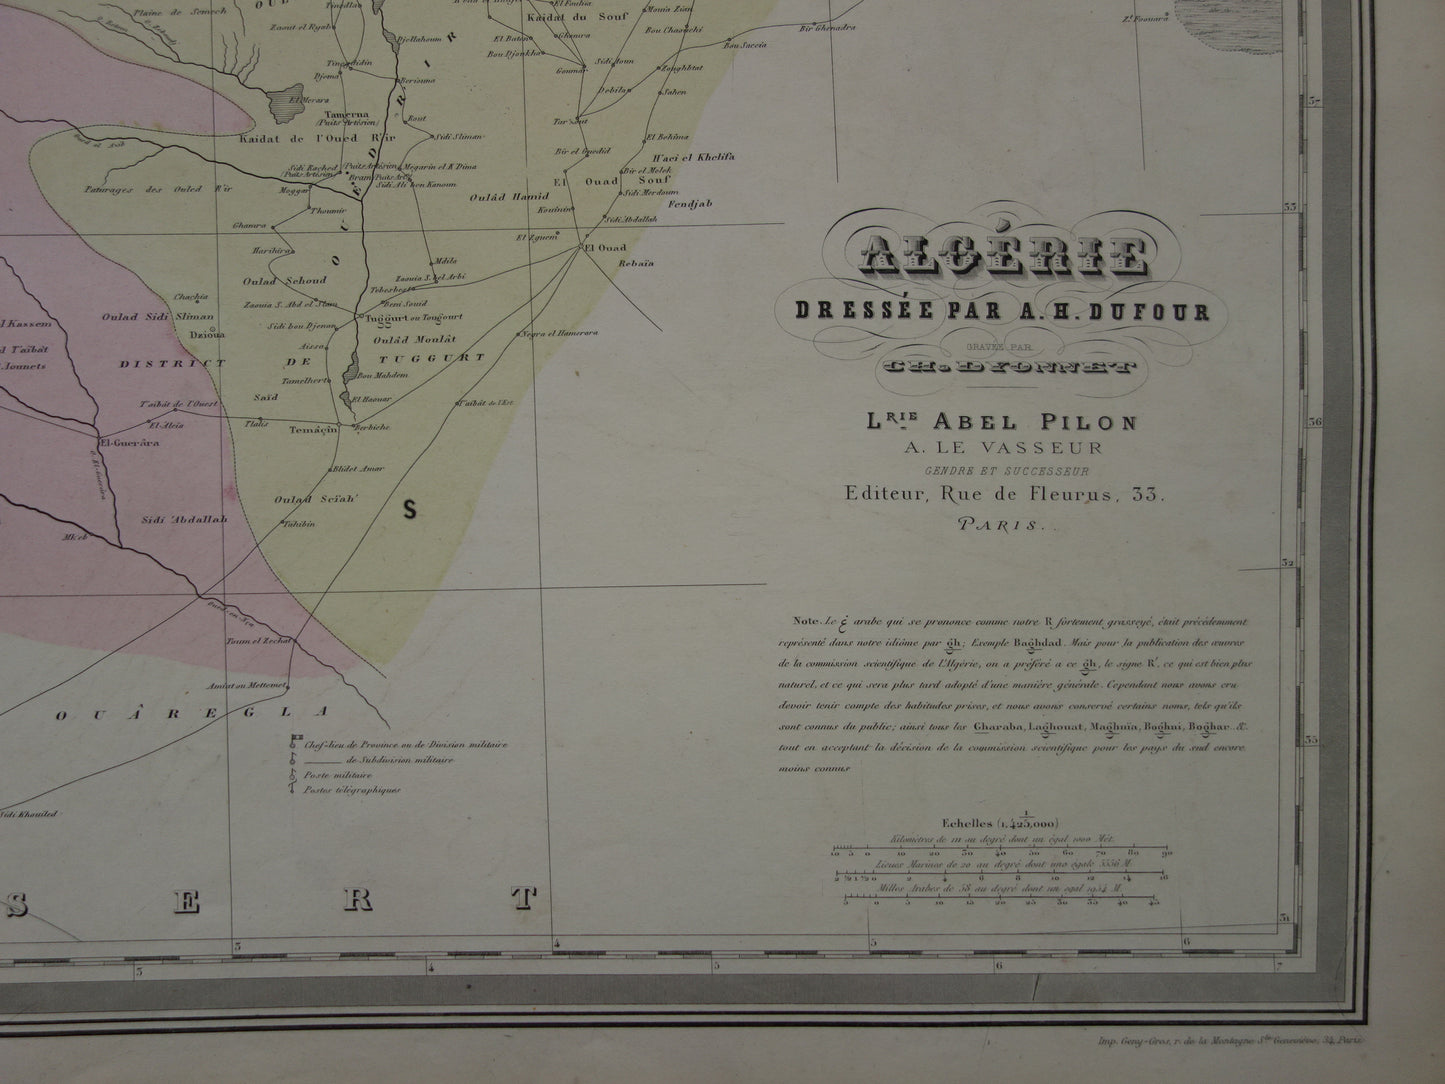 Algerije Grote oude landkaart uit 1880 Antieke kaart Algiers Originele vintage kaarten